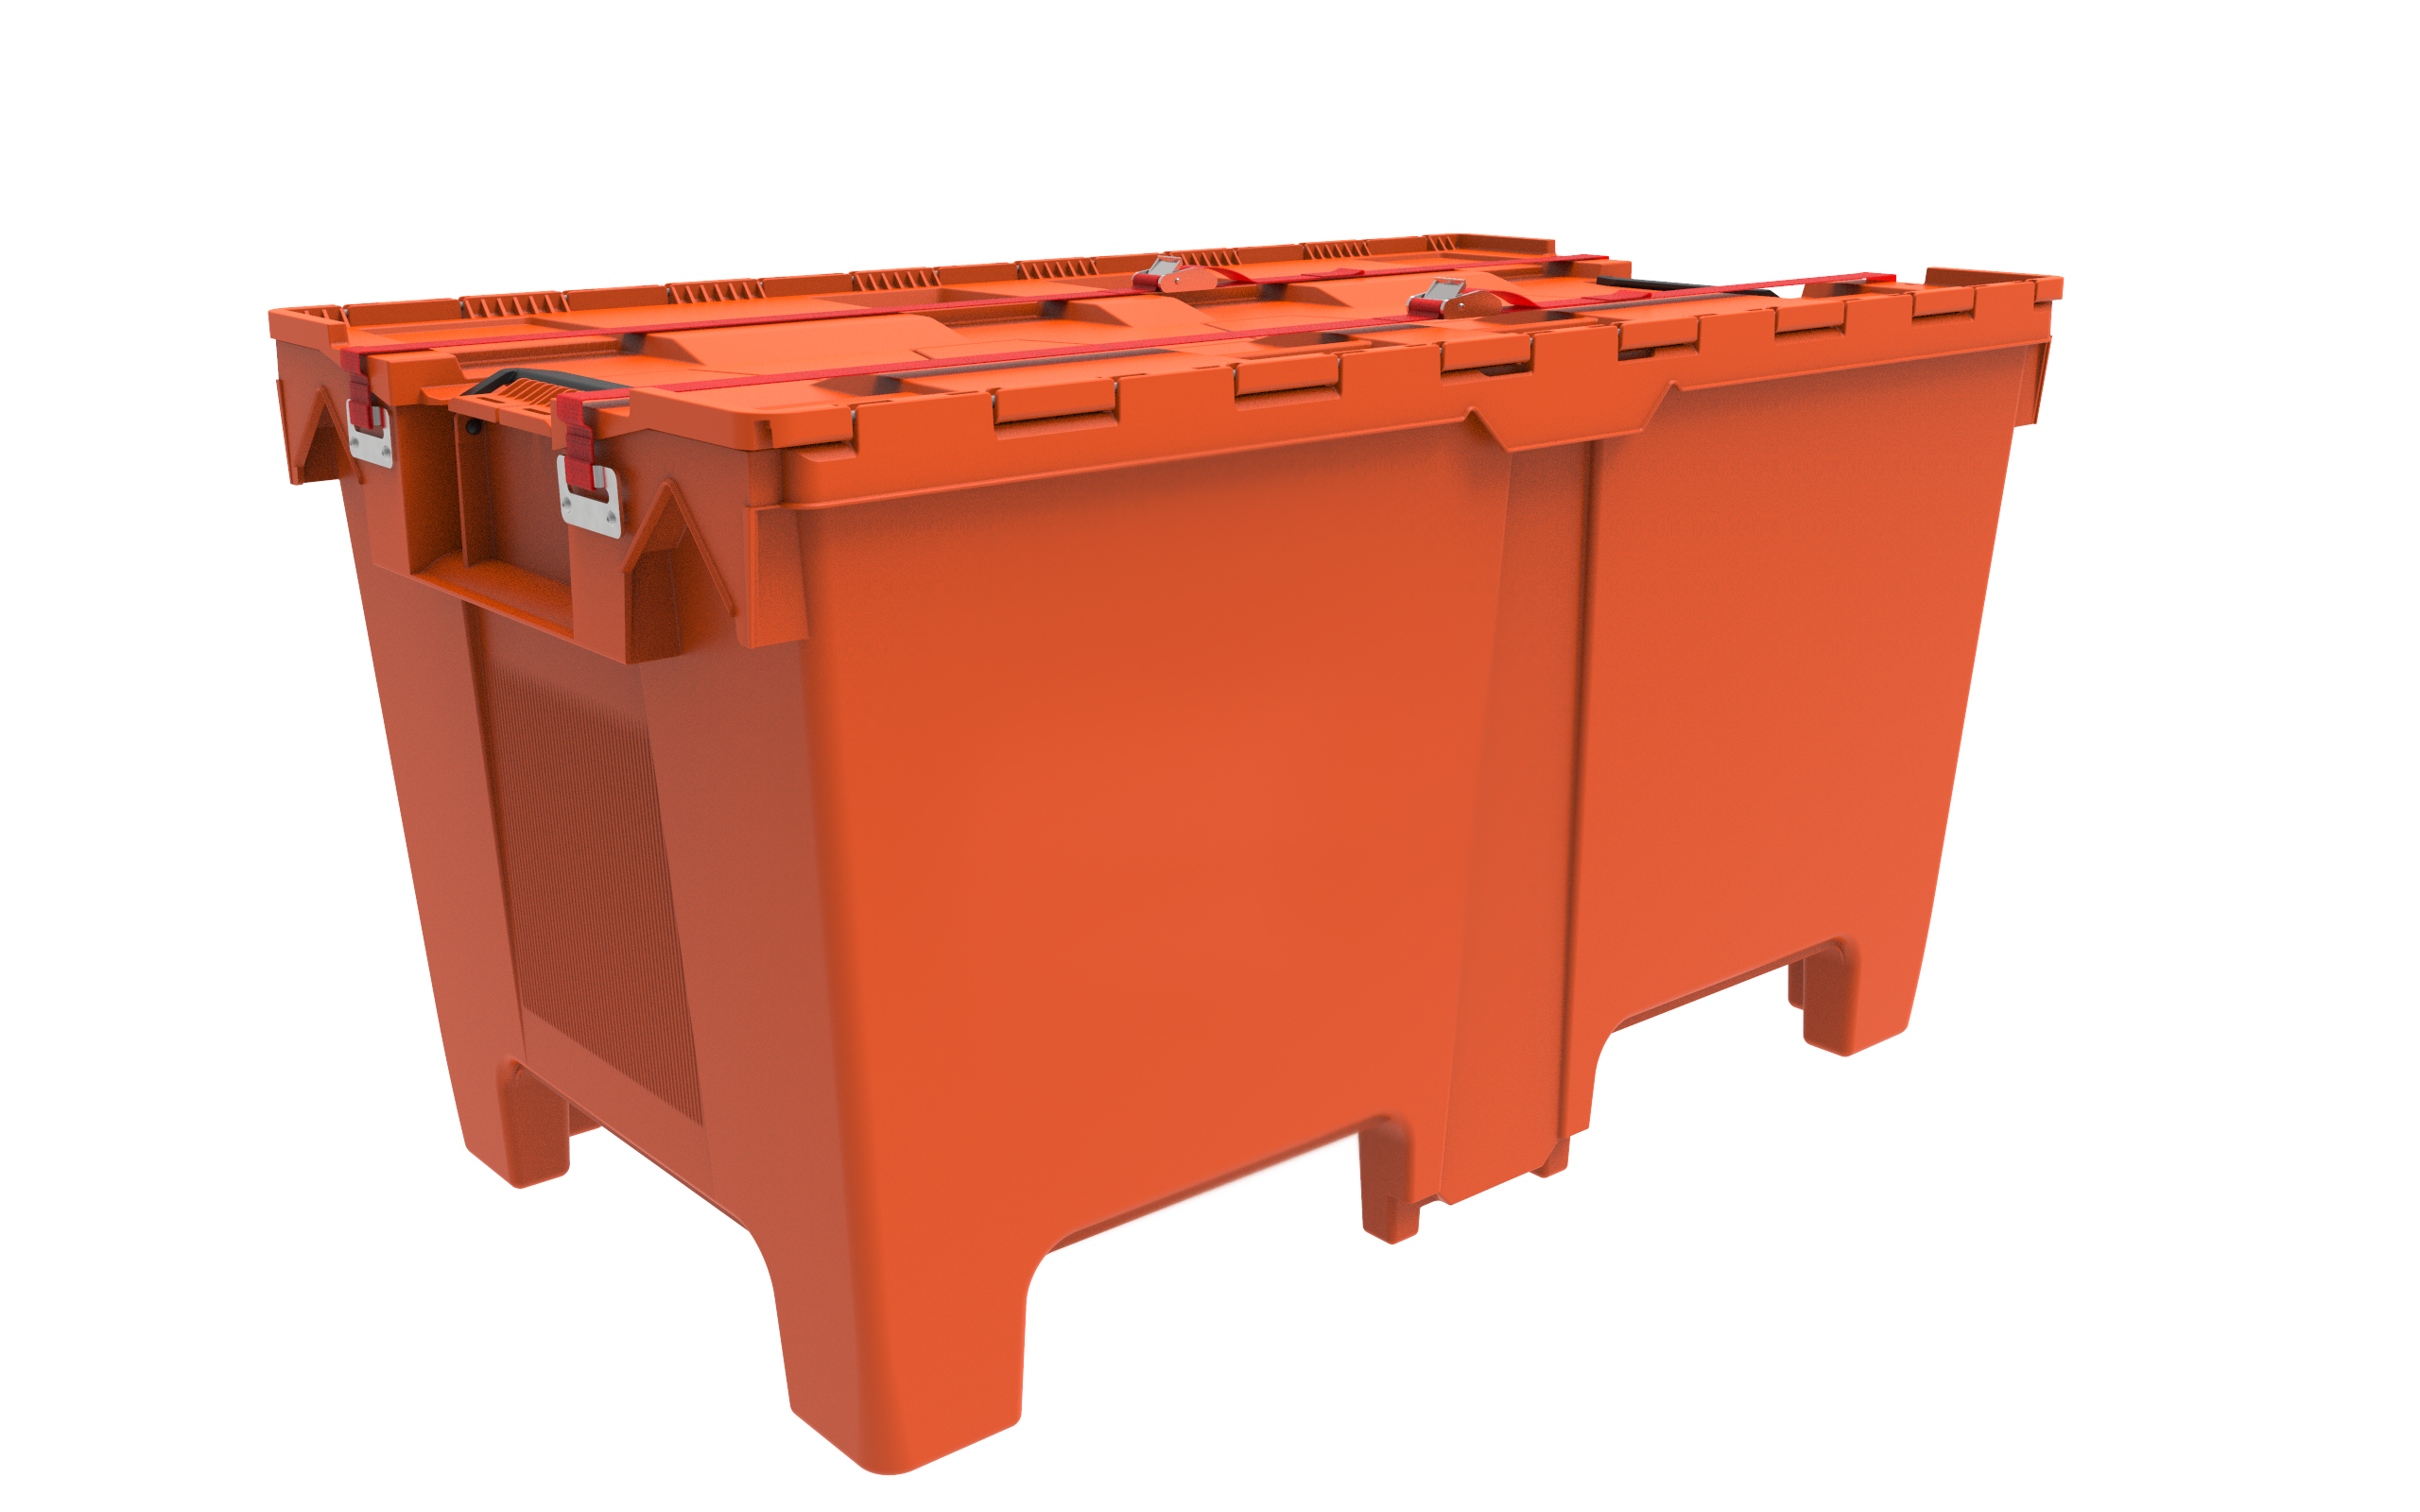 39 x 23 x 21 – Half Pallet Container – UN Certified